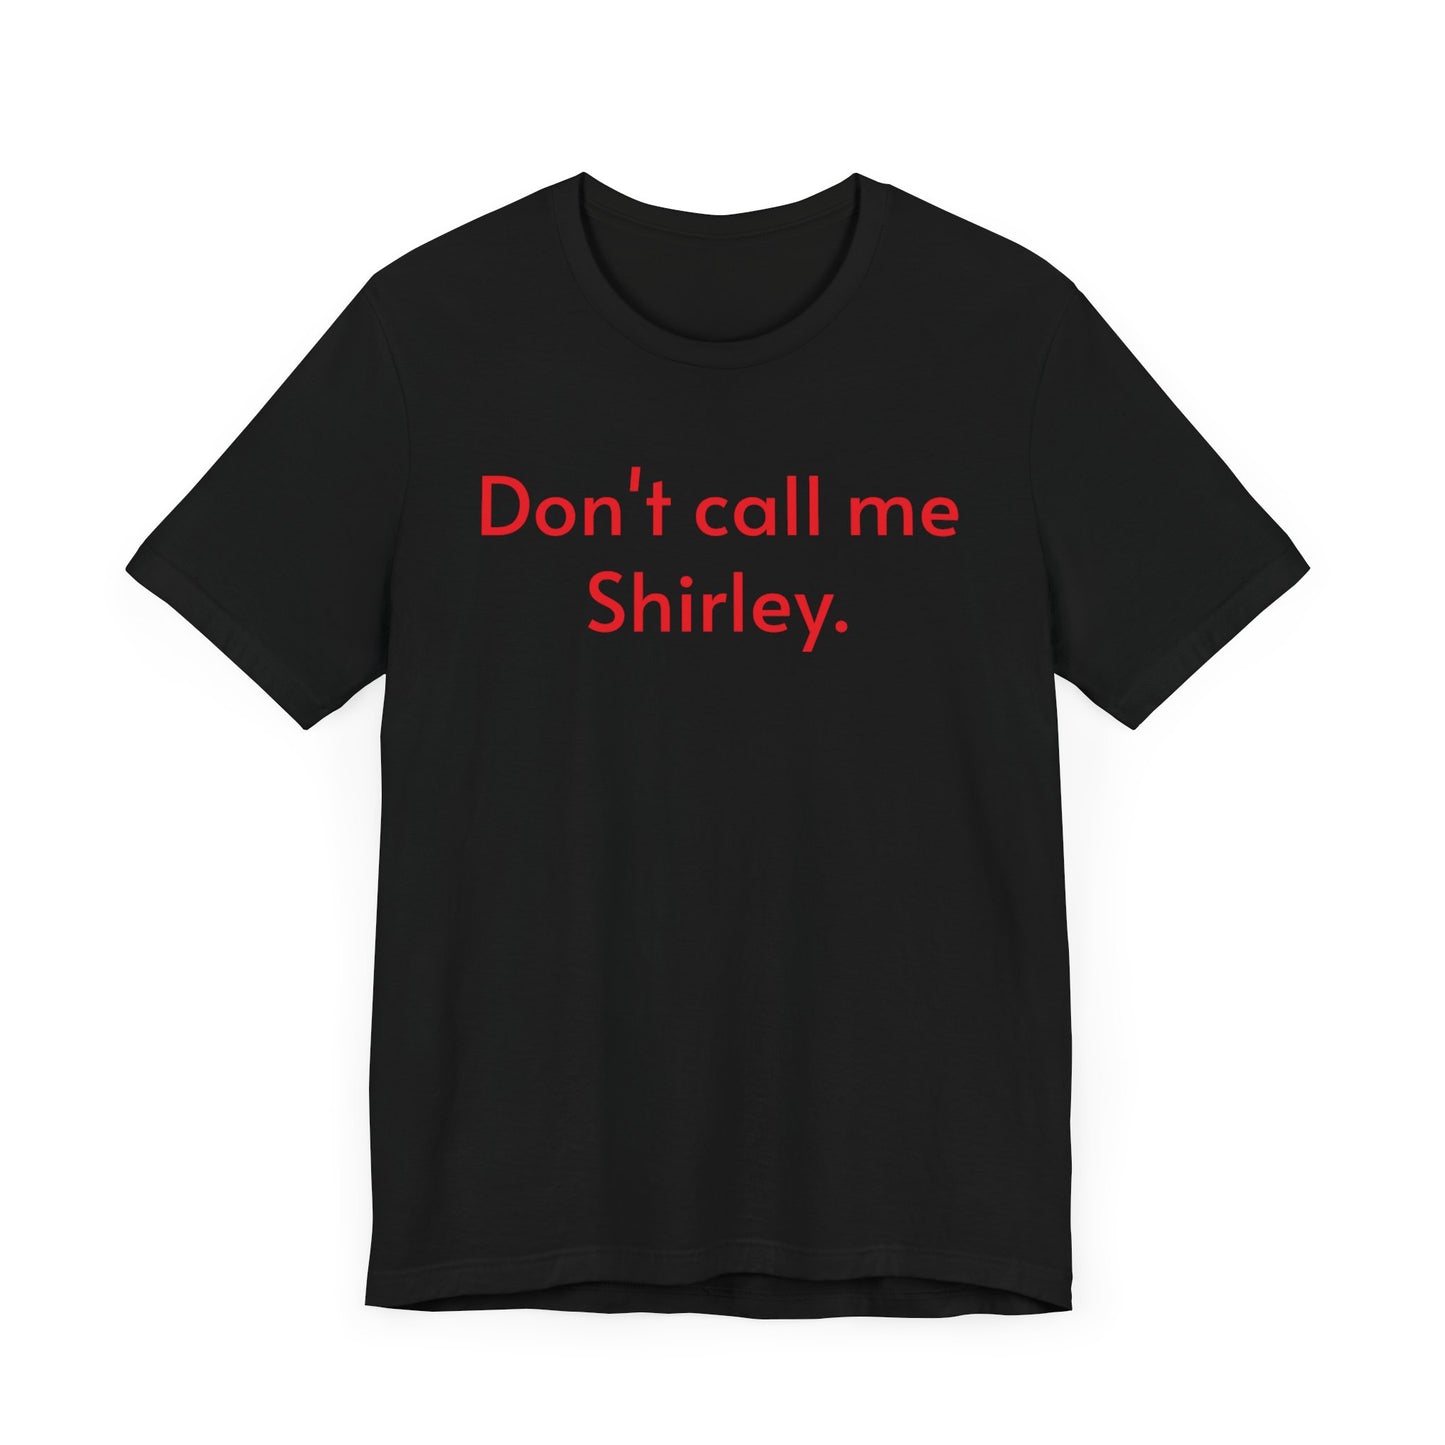 Don't call me Shirley.